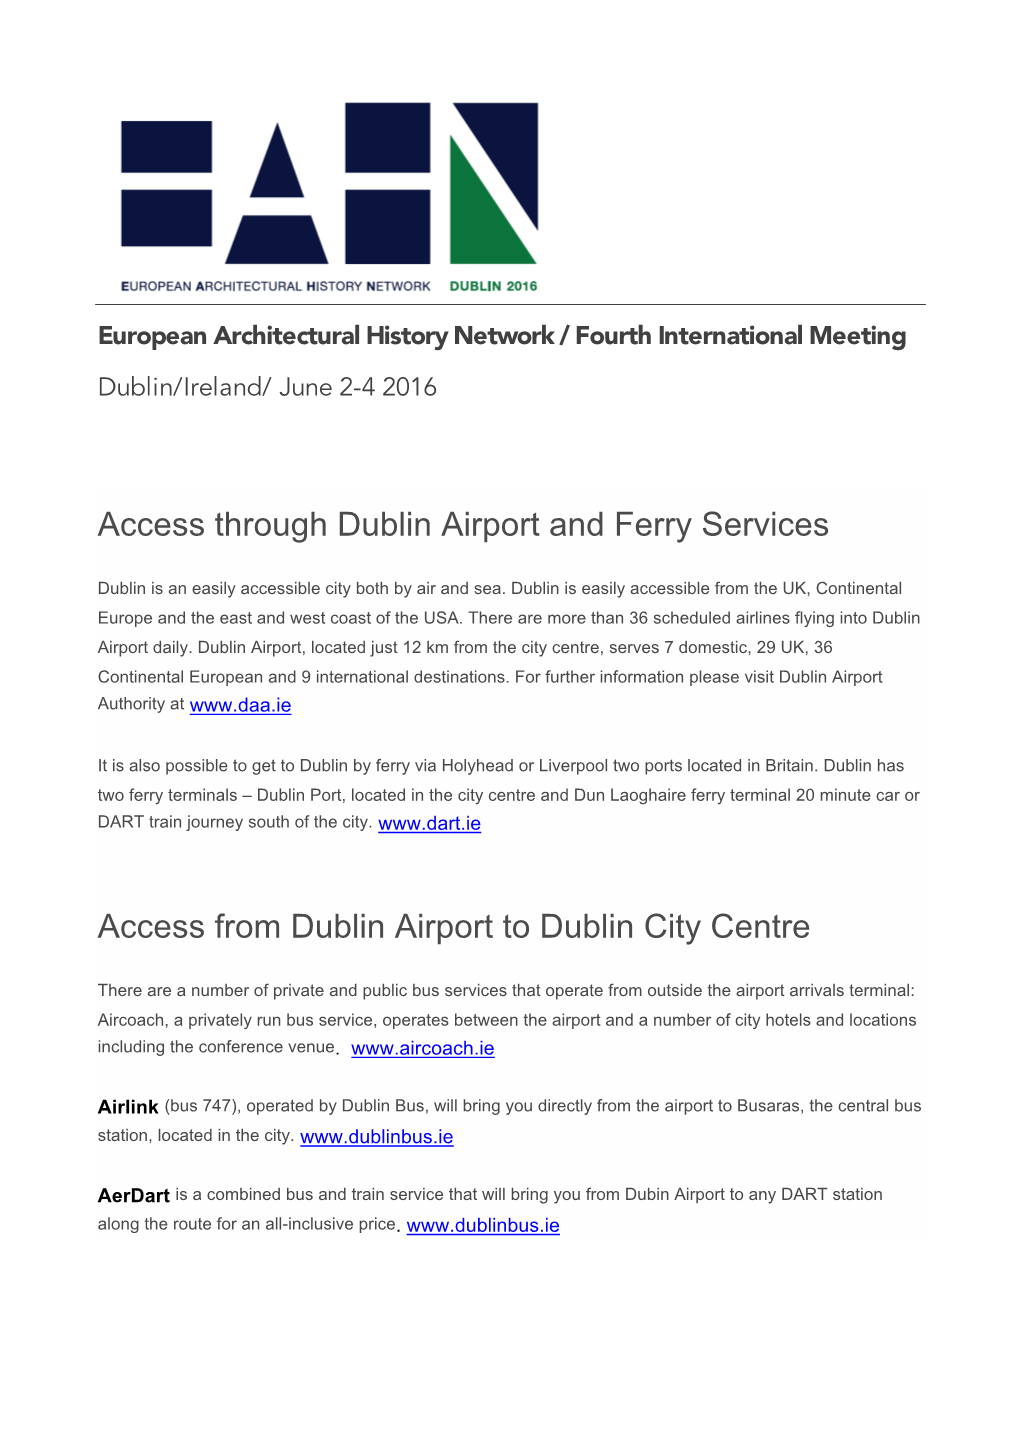 Access Through Dublin Airport and Ferry Services Access from Dublin Airport to Dublin City Centre